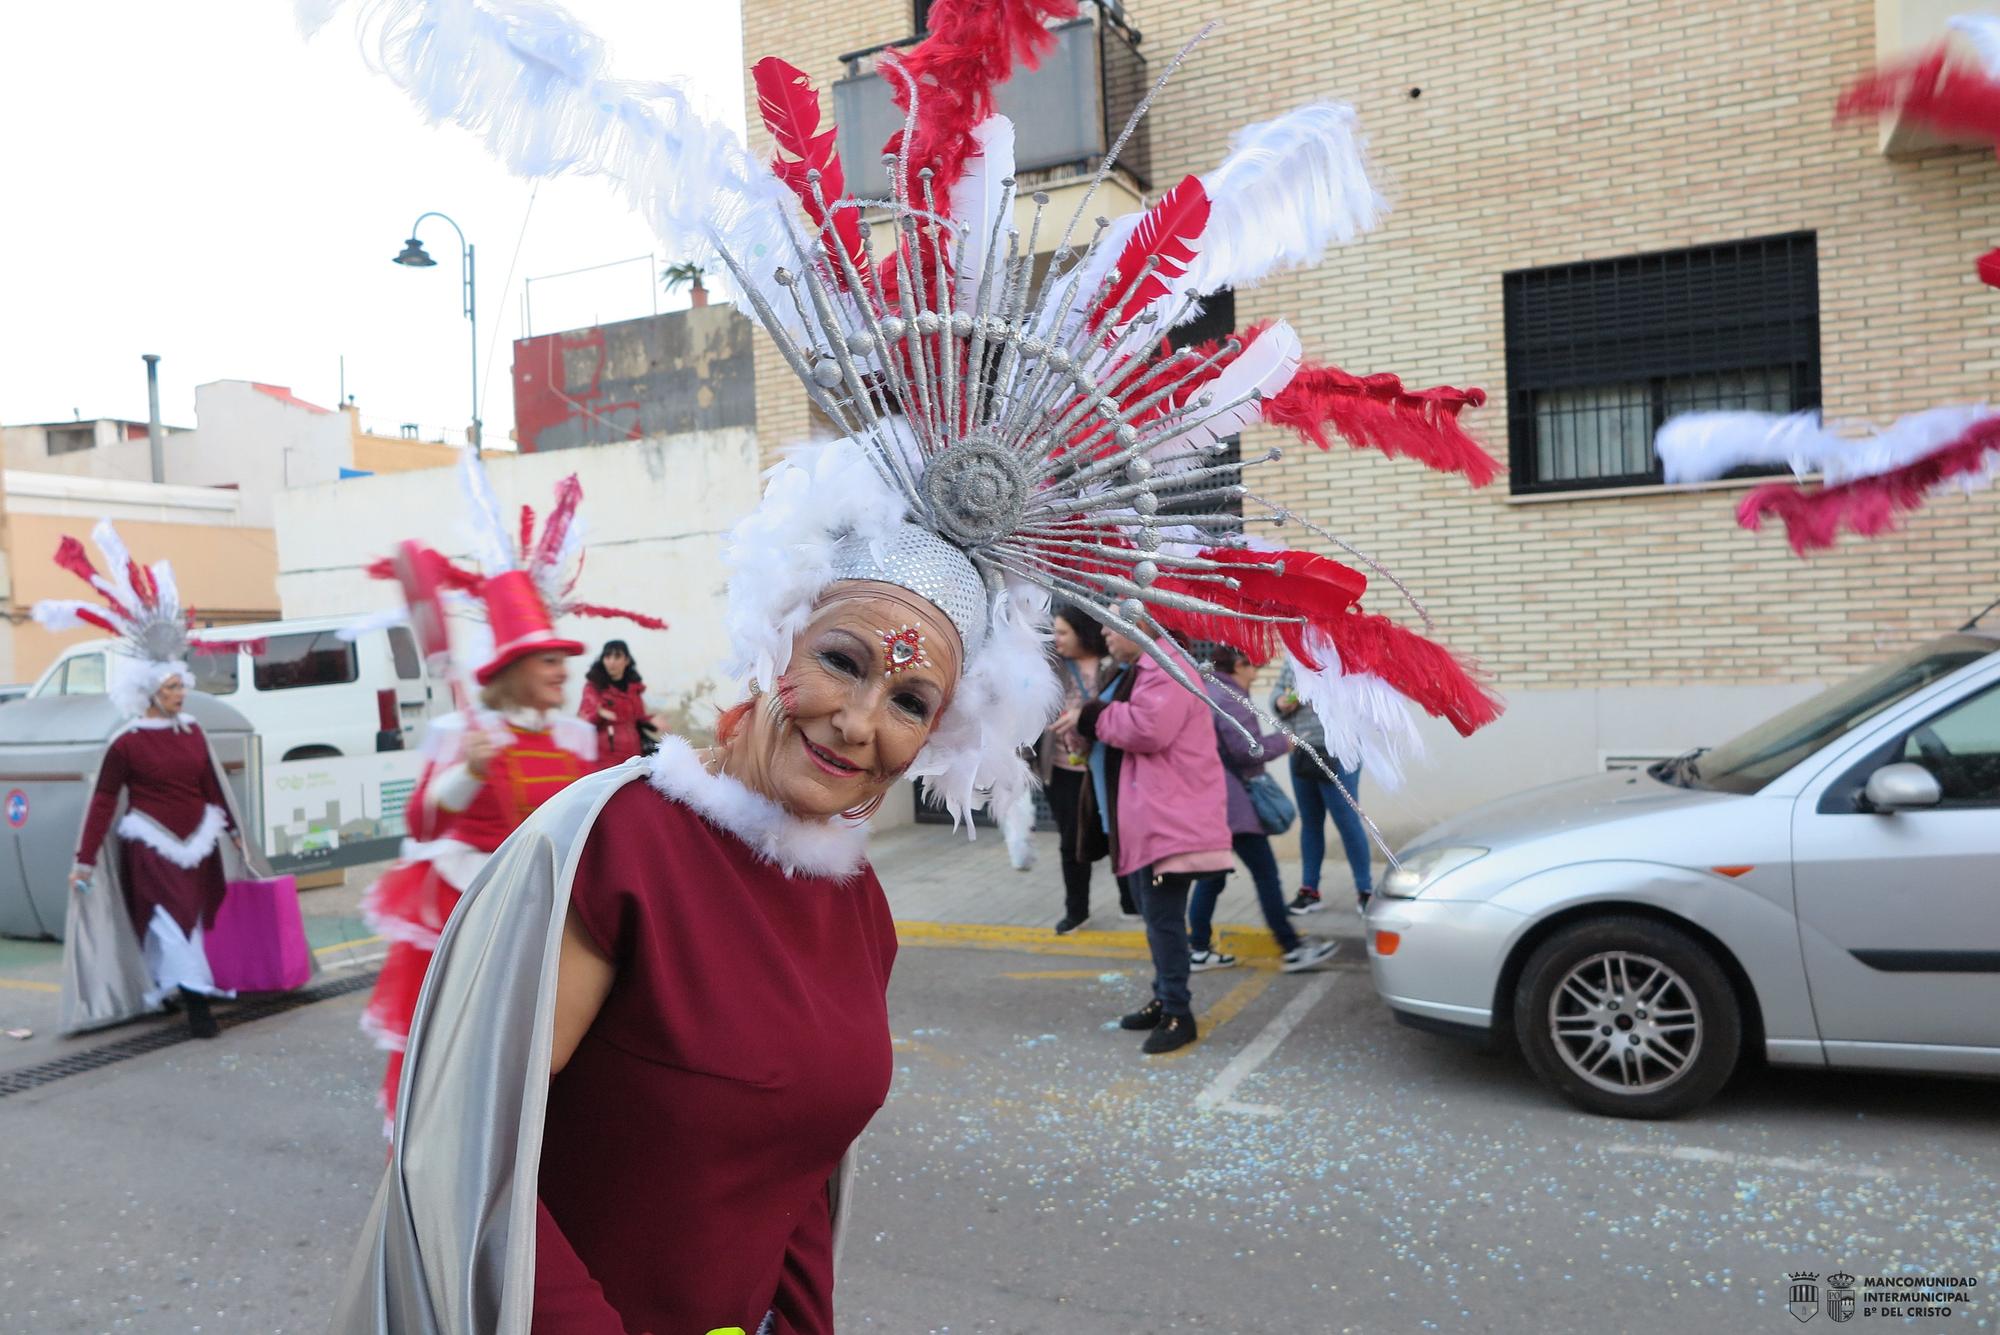 Buscate en el Carnaval de Quart de Poblet